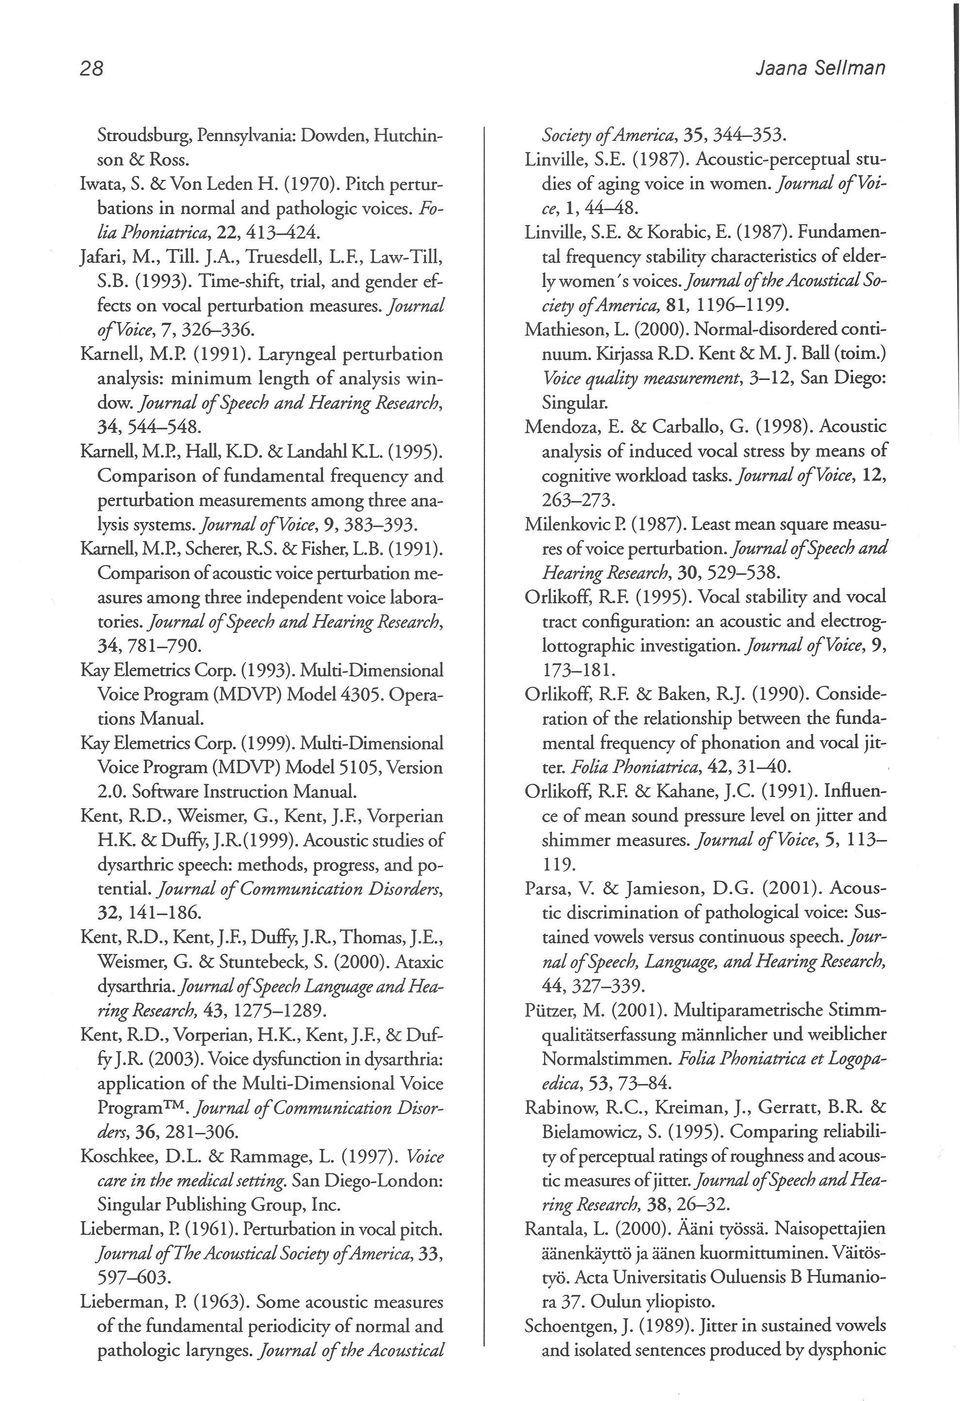 Laryngeal perrurbation analysis: minimum length of analysis window. Journal ofspeech and Hearing Research, 34,544-548. Kameli, M.P., Hall, KD. & Landahl KL. (1995).